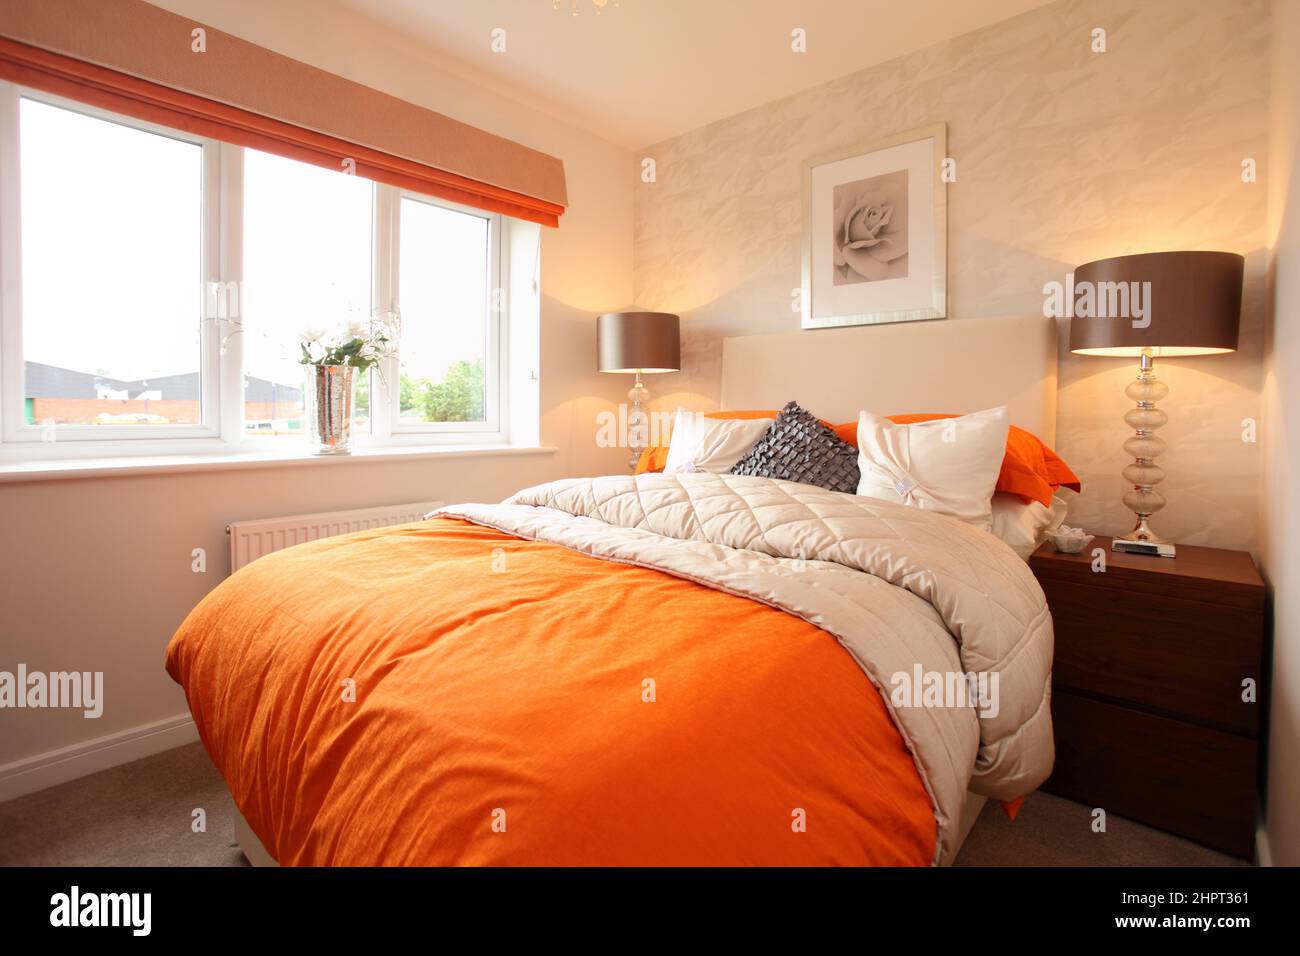 Vivid orange decor bedspread and cushions in a modern bedroom scene setting. Stock Photo